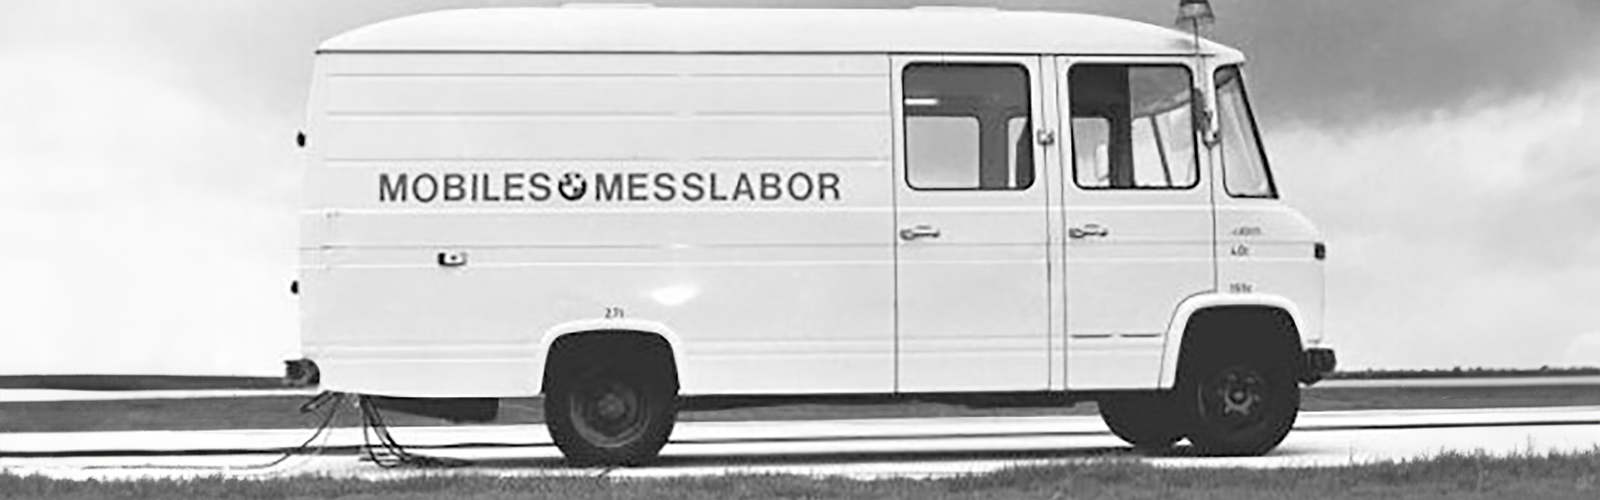 mobilesMesslabor